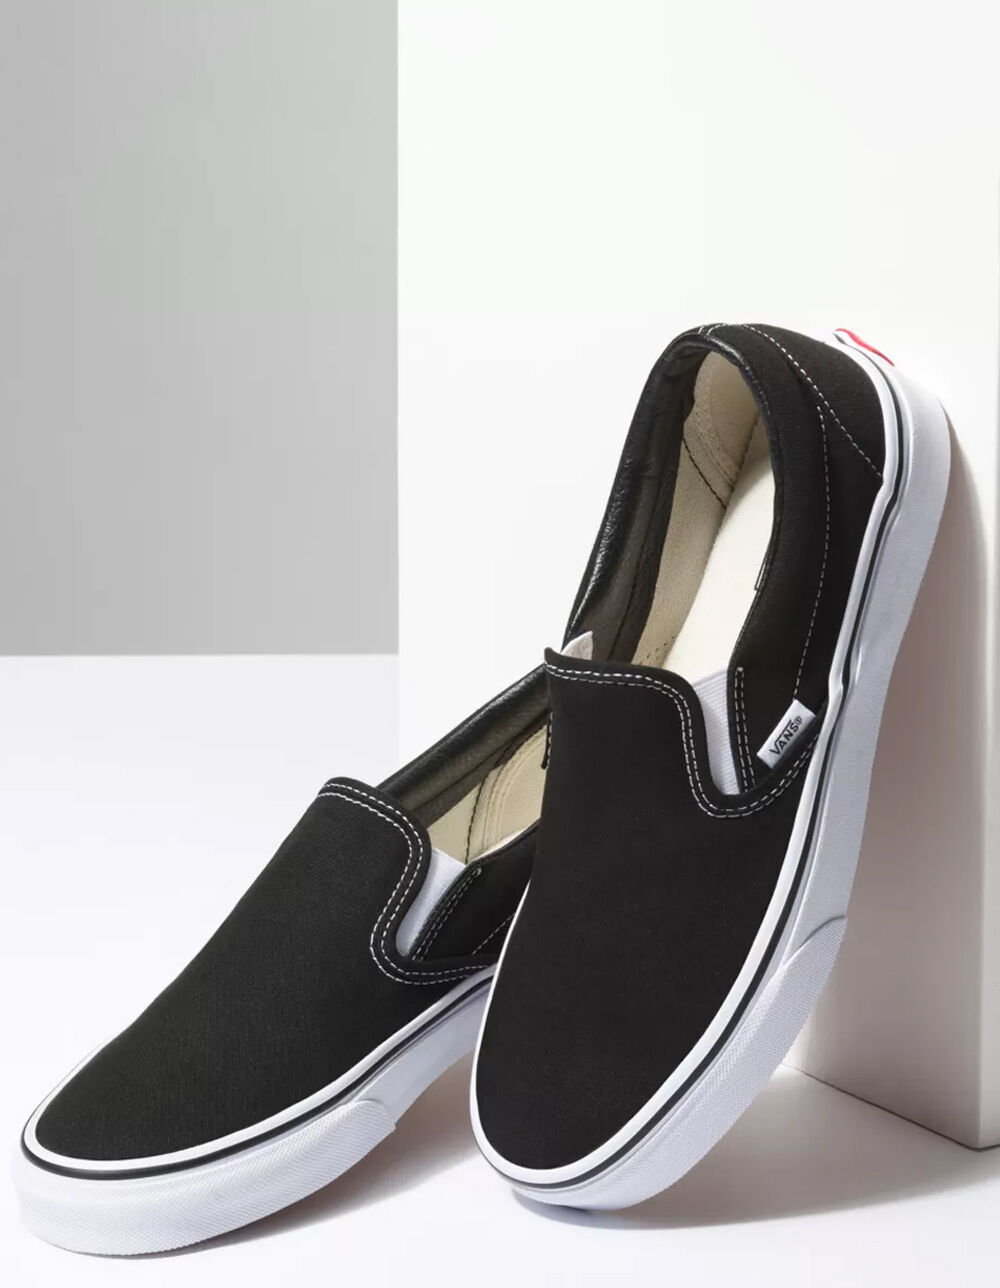 Vans Classic Slip-On Shoe